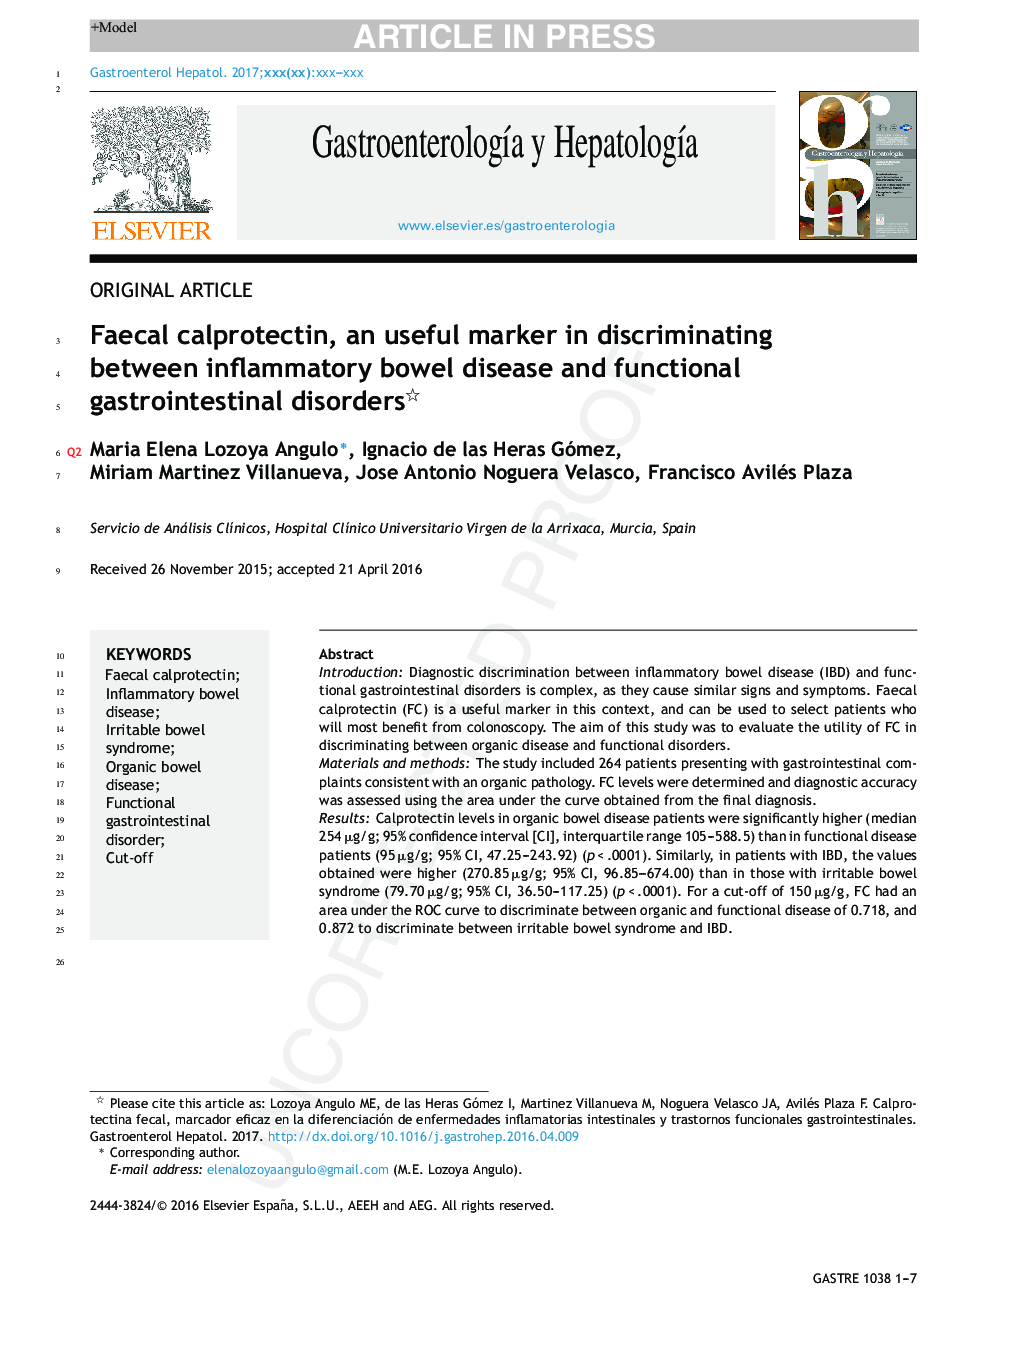 Faecal calprotectin, an useful marker in discriminating between inflammatory bowel disease and functional gastrointestinal disorders